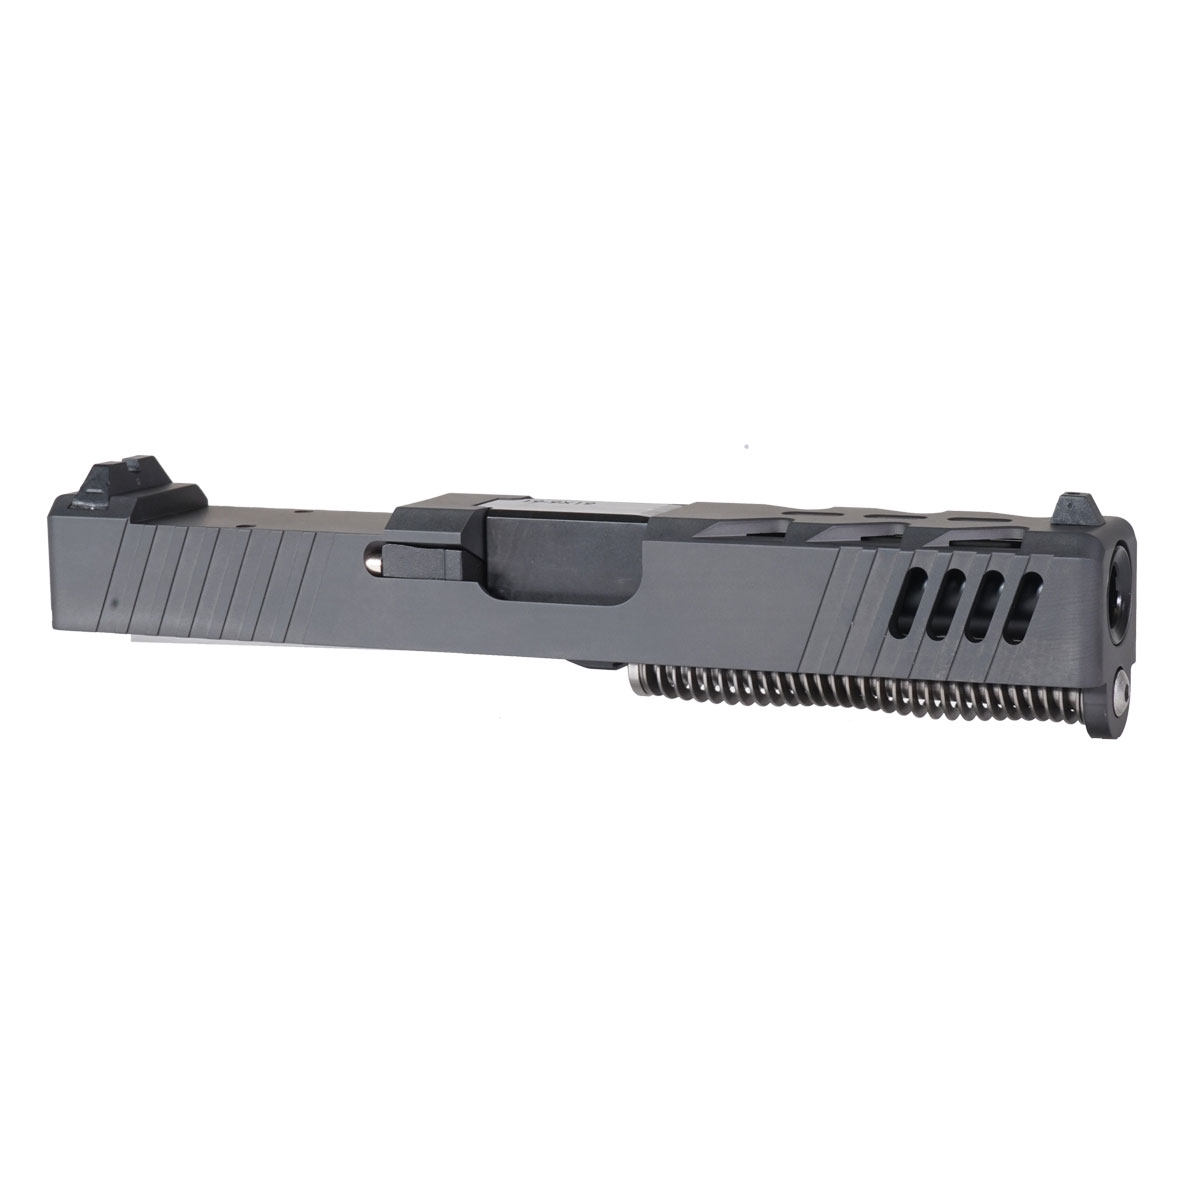 OTD 'The Yiker' 9mm Complete Slide Kit - Glock 19 Gen 1-3 Compatible